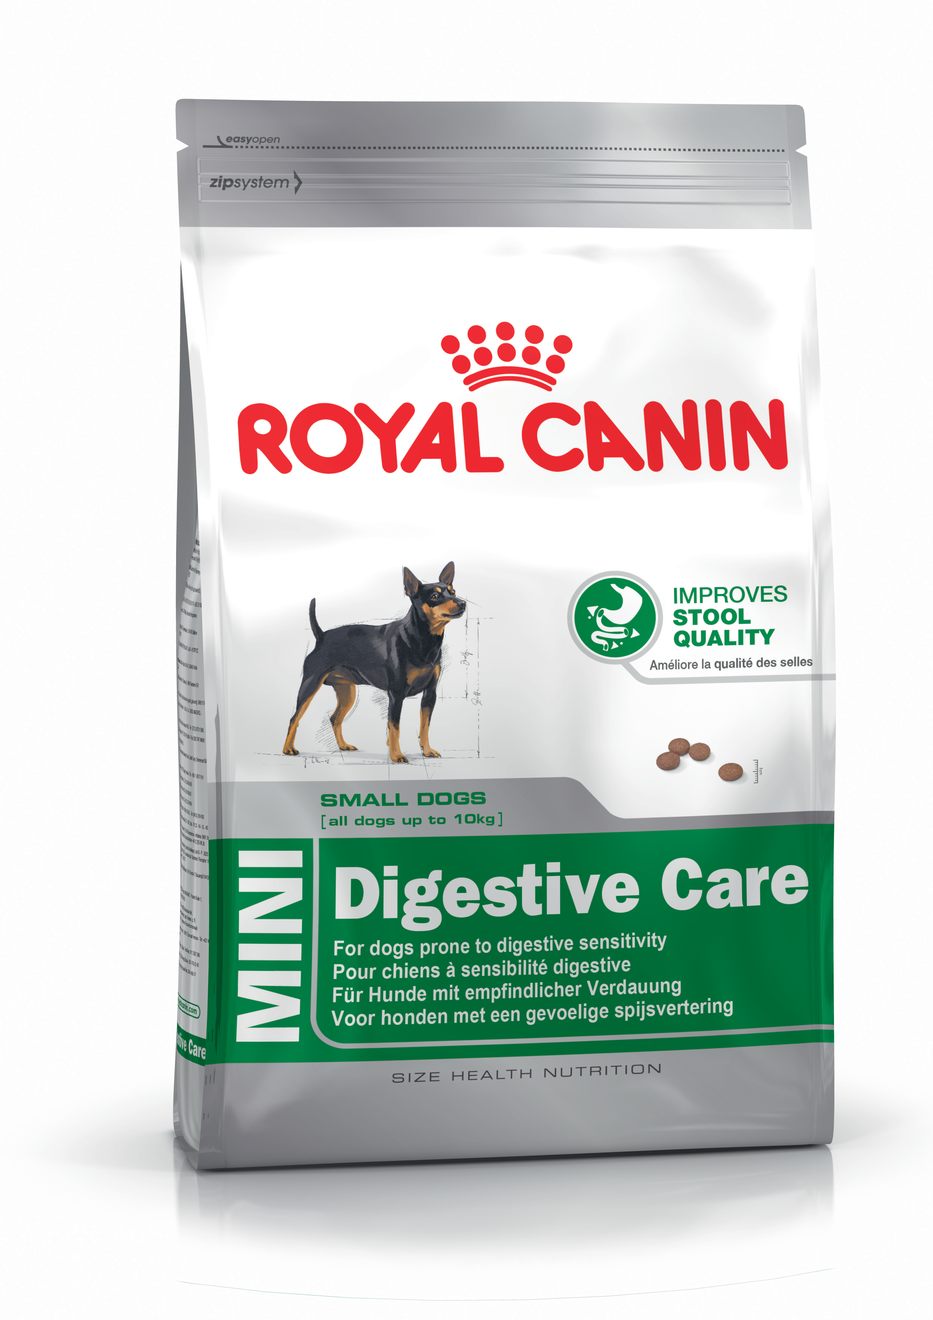 royal canin mini digestive care 10 kg